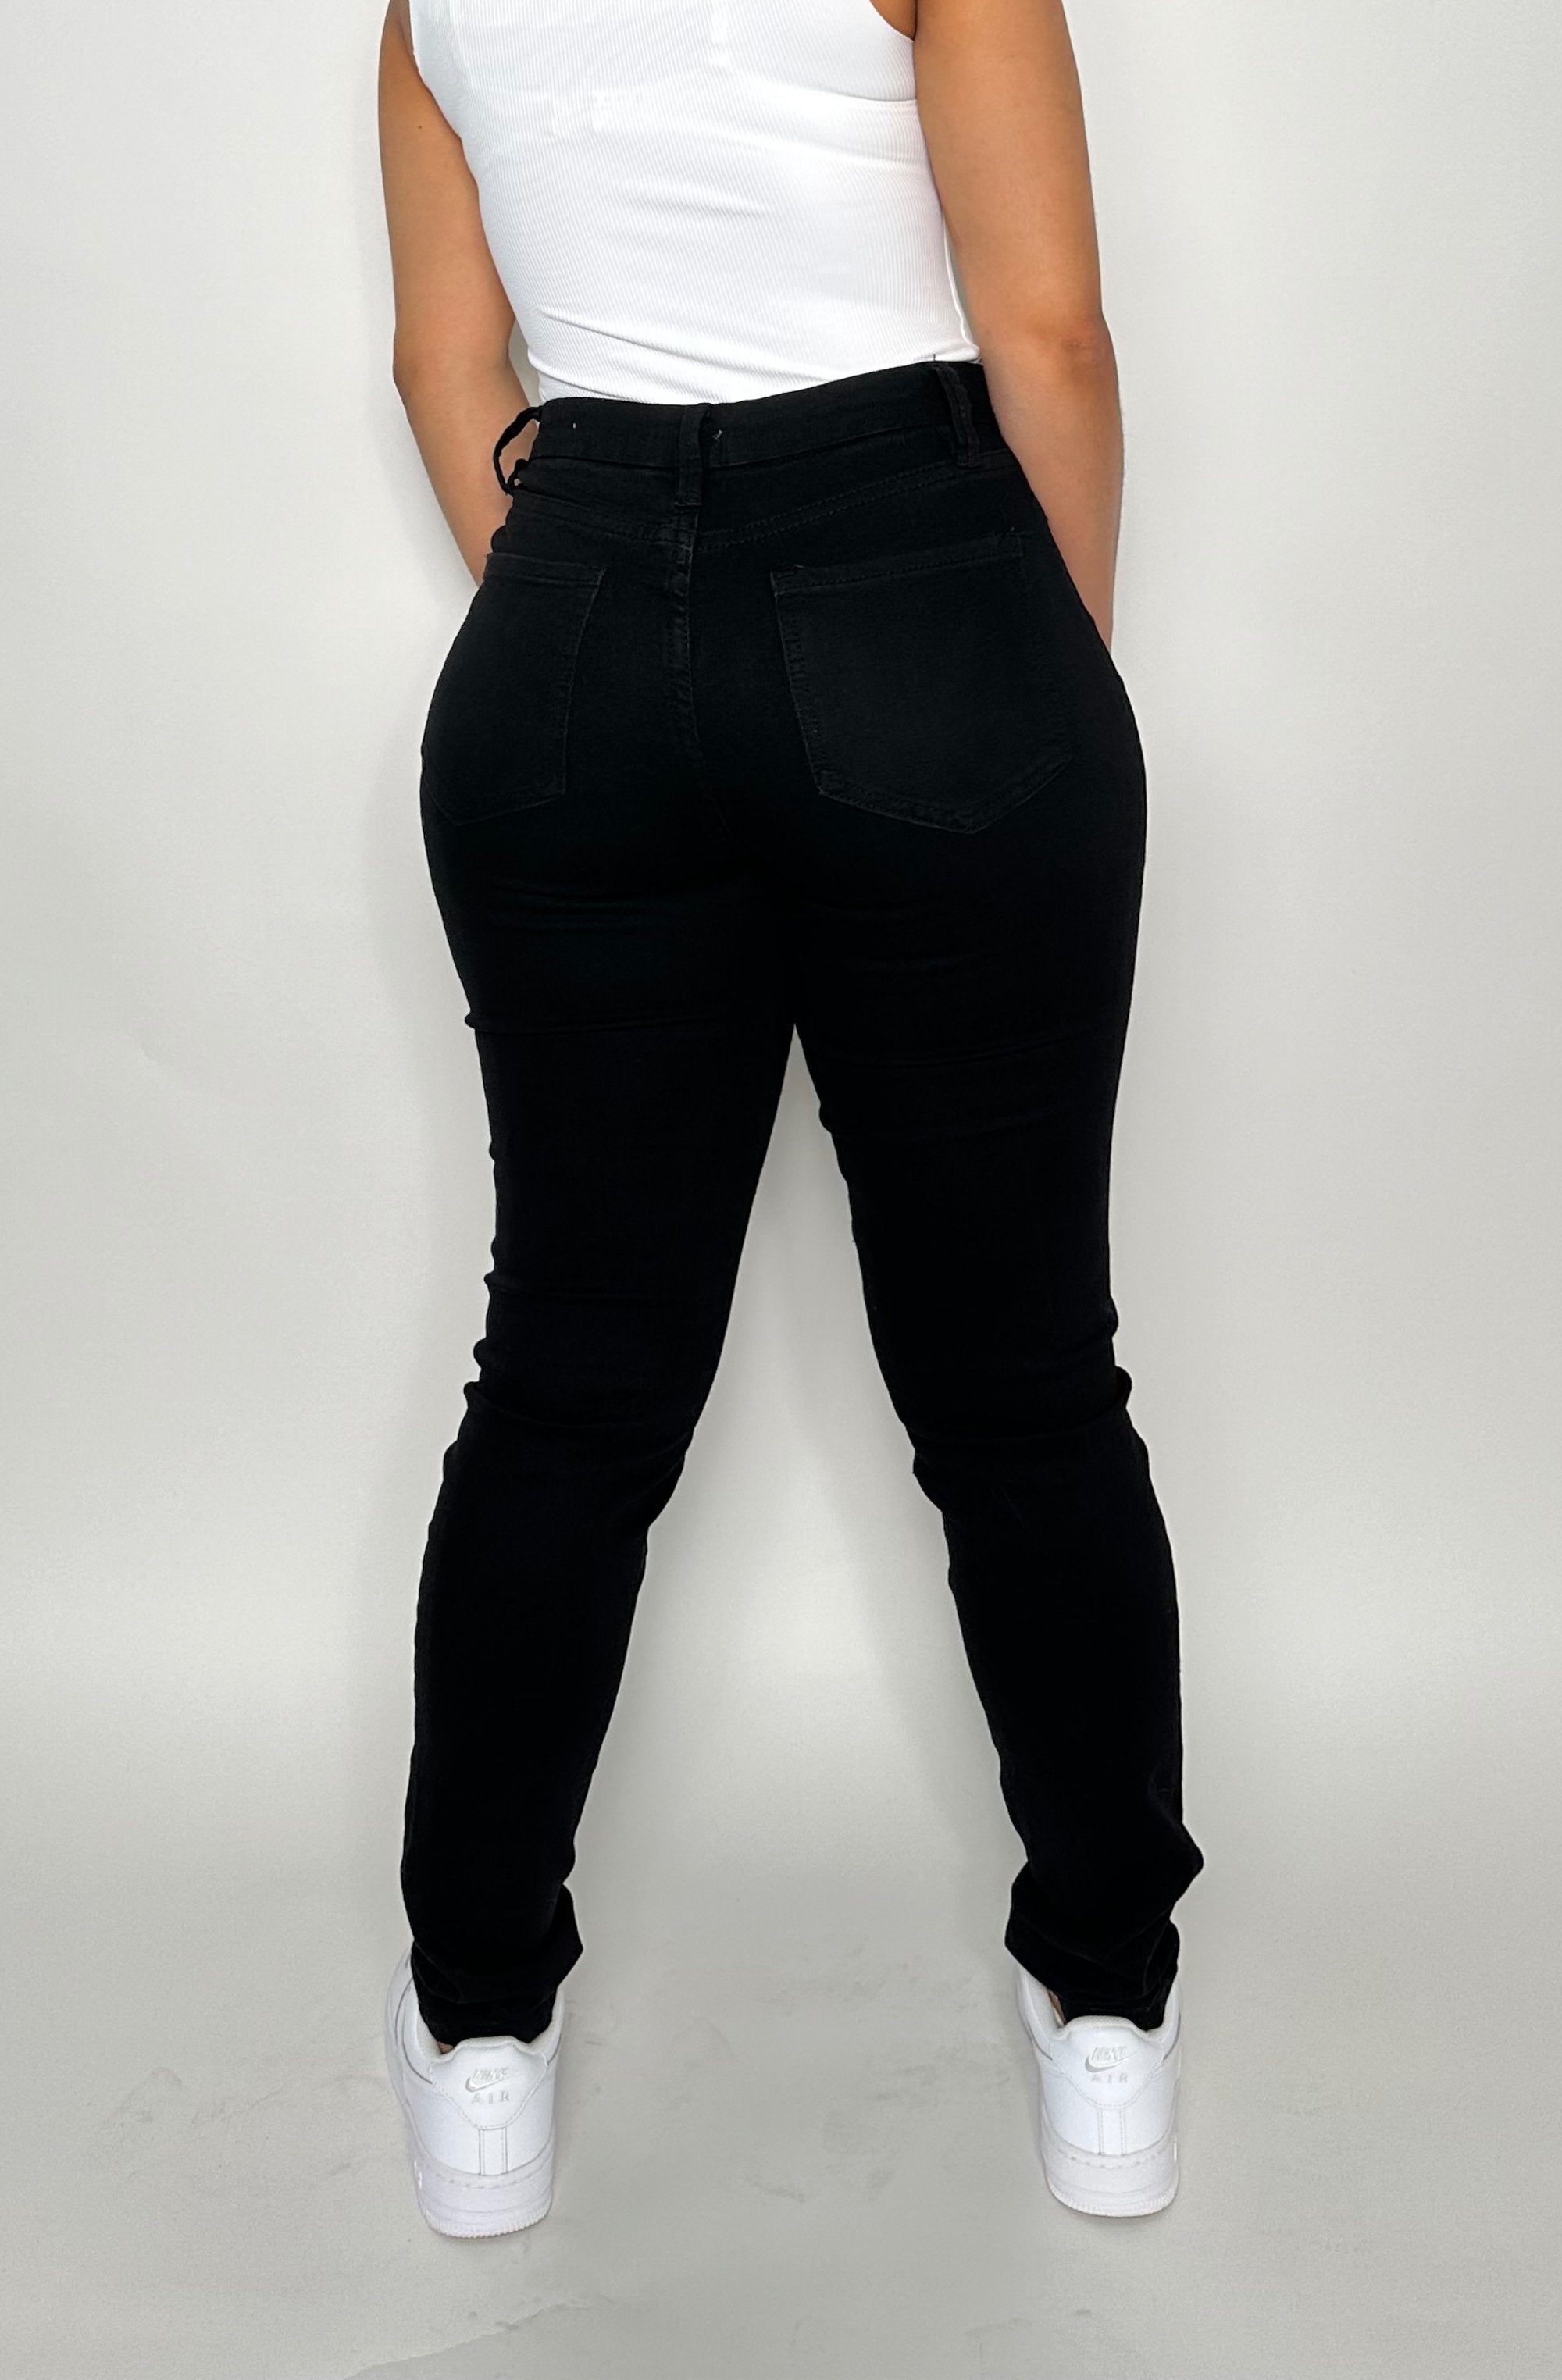 NatxCustomStyle Jeans | Skinny jeans | Ultra-high-rise back skinny jeans